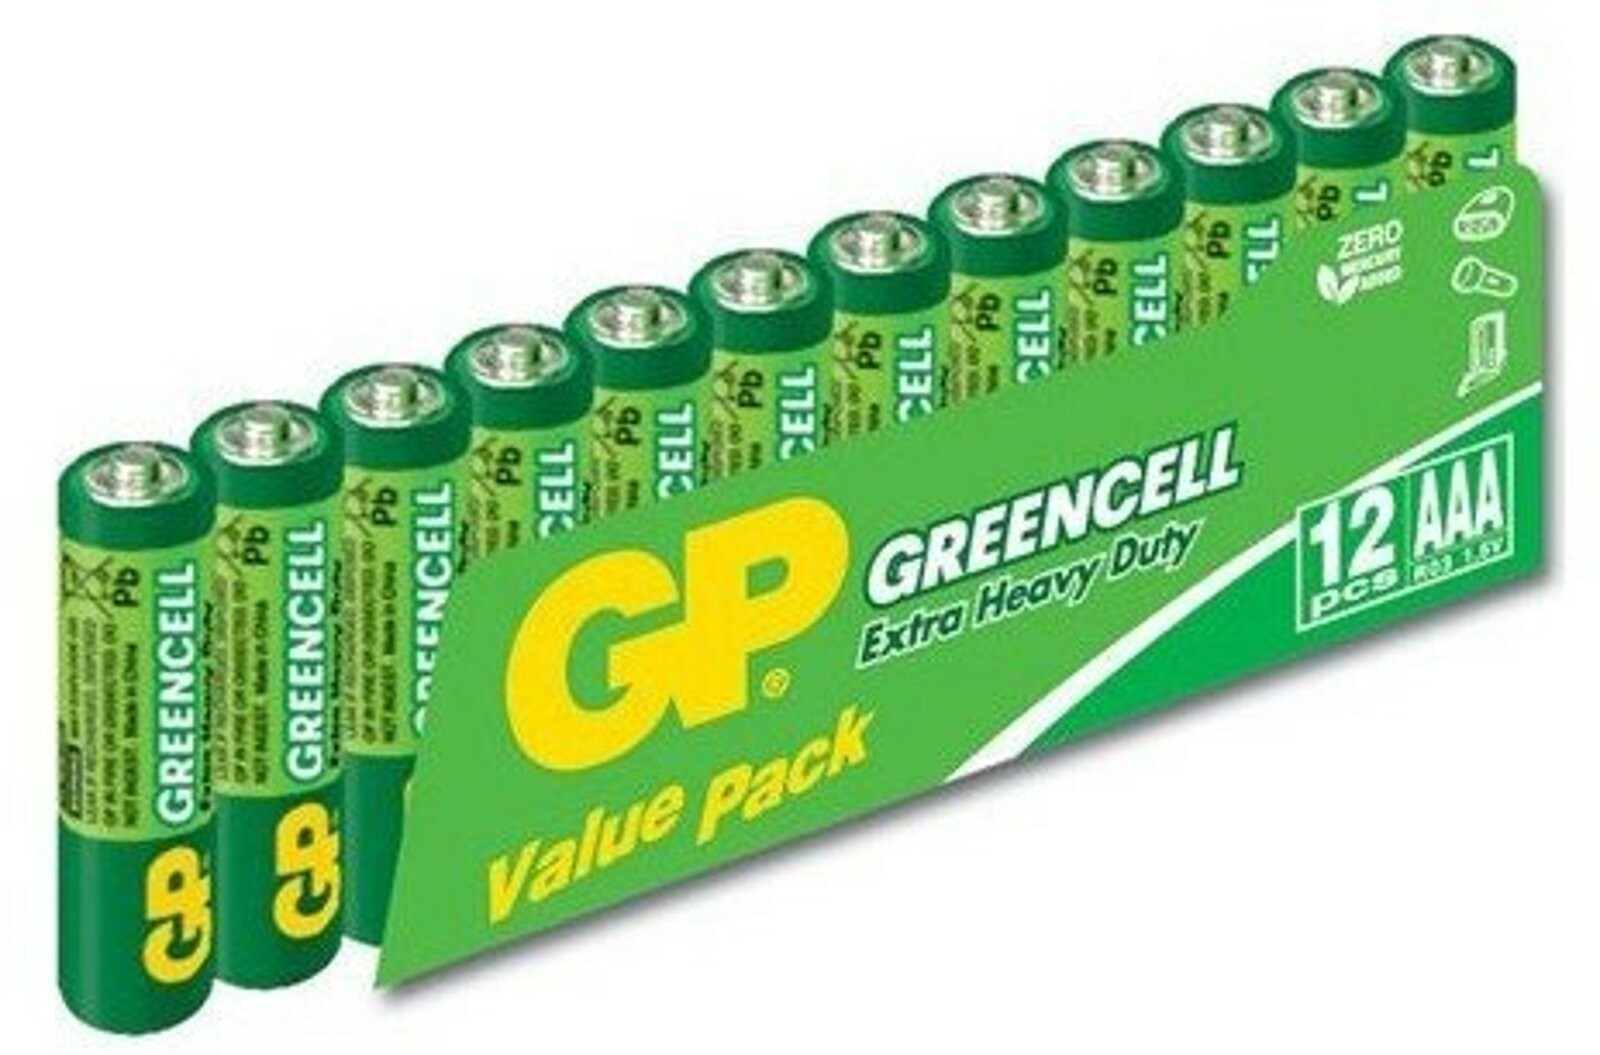 Gp batteries. Батарея GP 15s(r6/AA)-0s4. Батарейки GP 15g. Зеленые батарейки GP. Батарейки GP Модельный ряд.